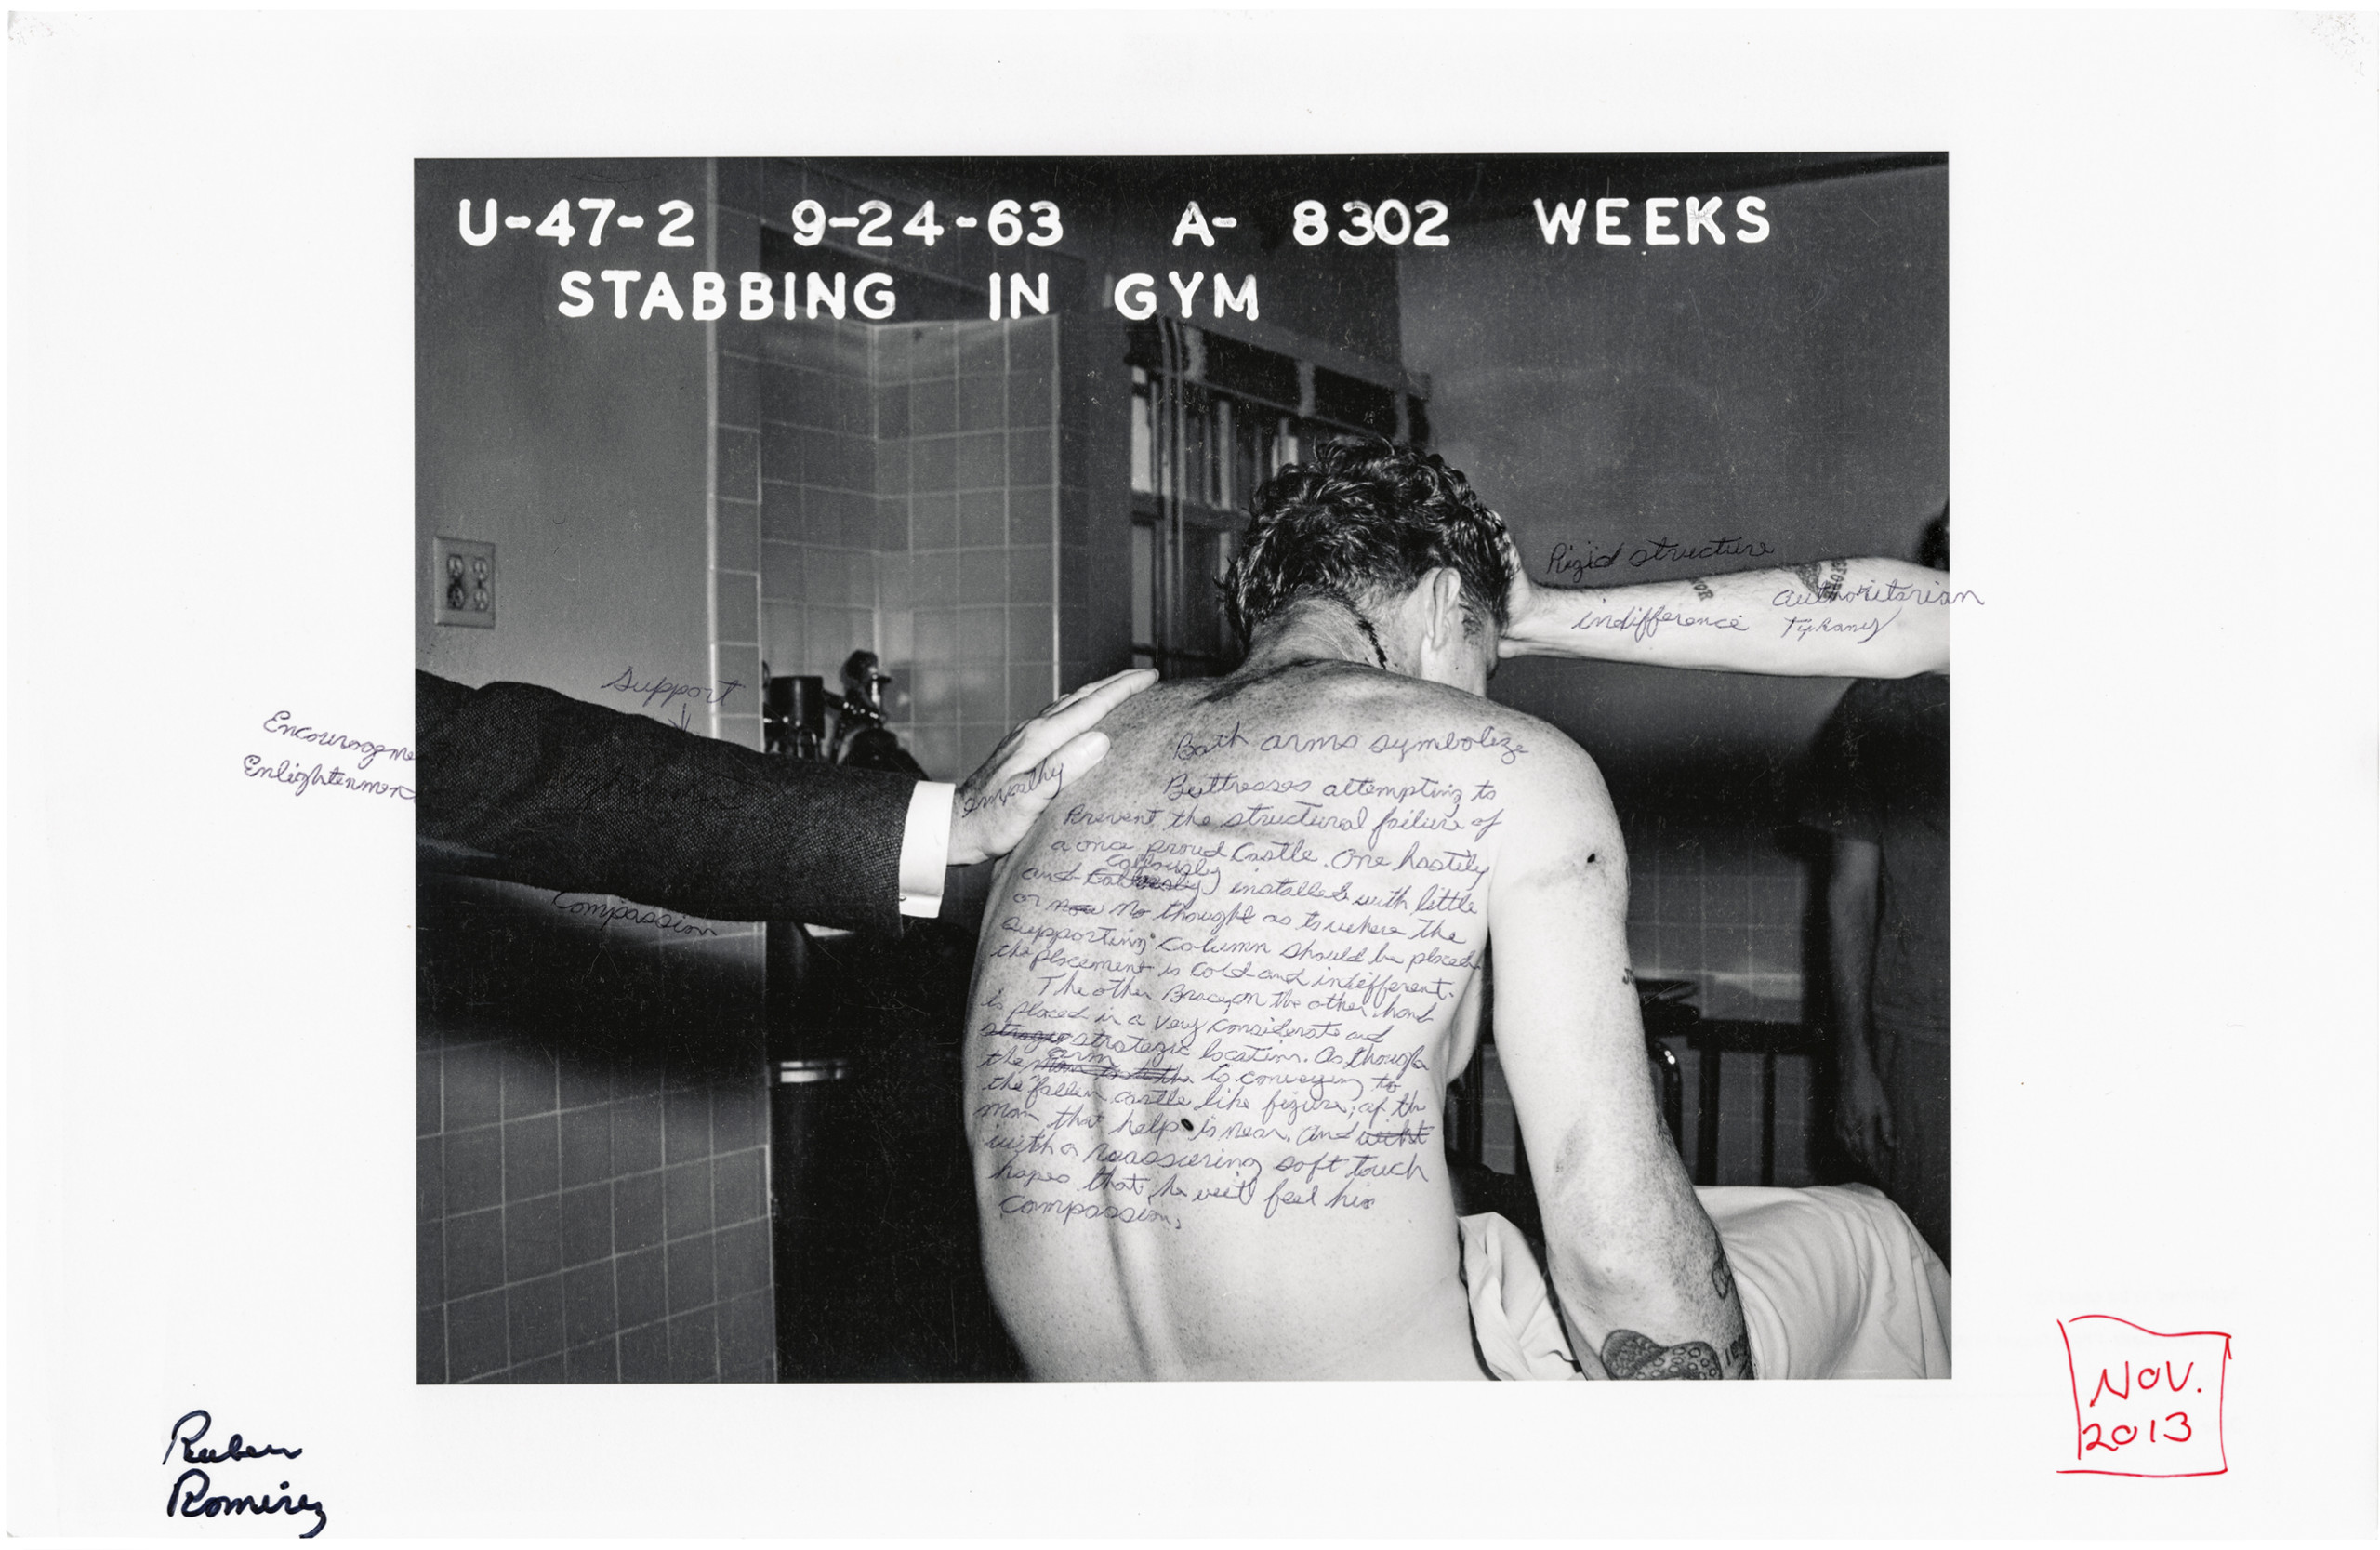 Stabbing in gym, September 24, 1963 mapped by Ruben Ramirez.